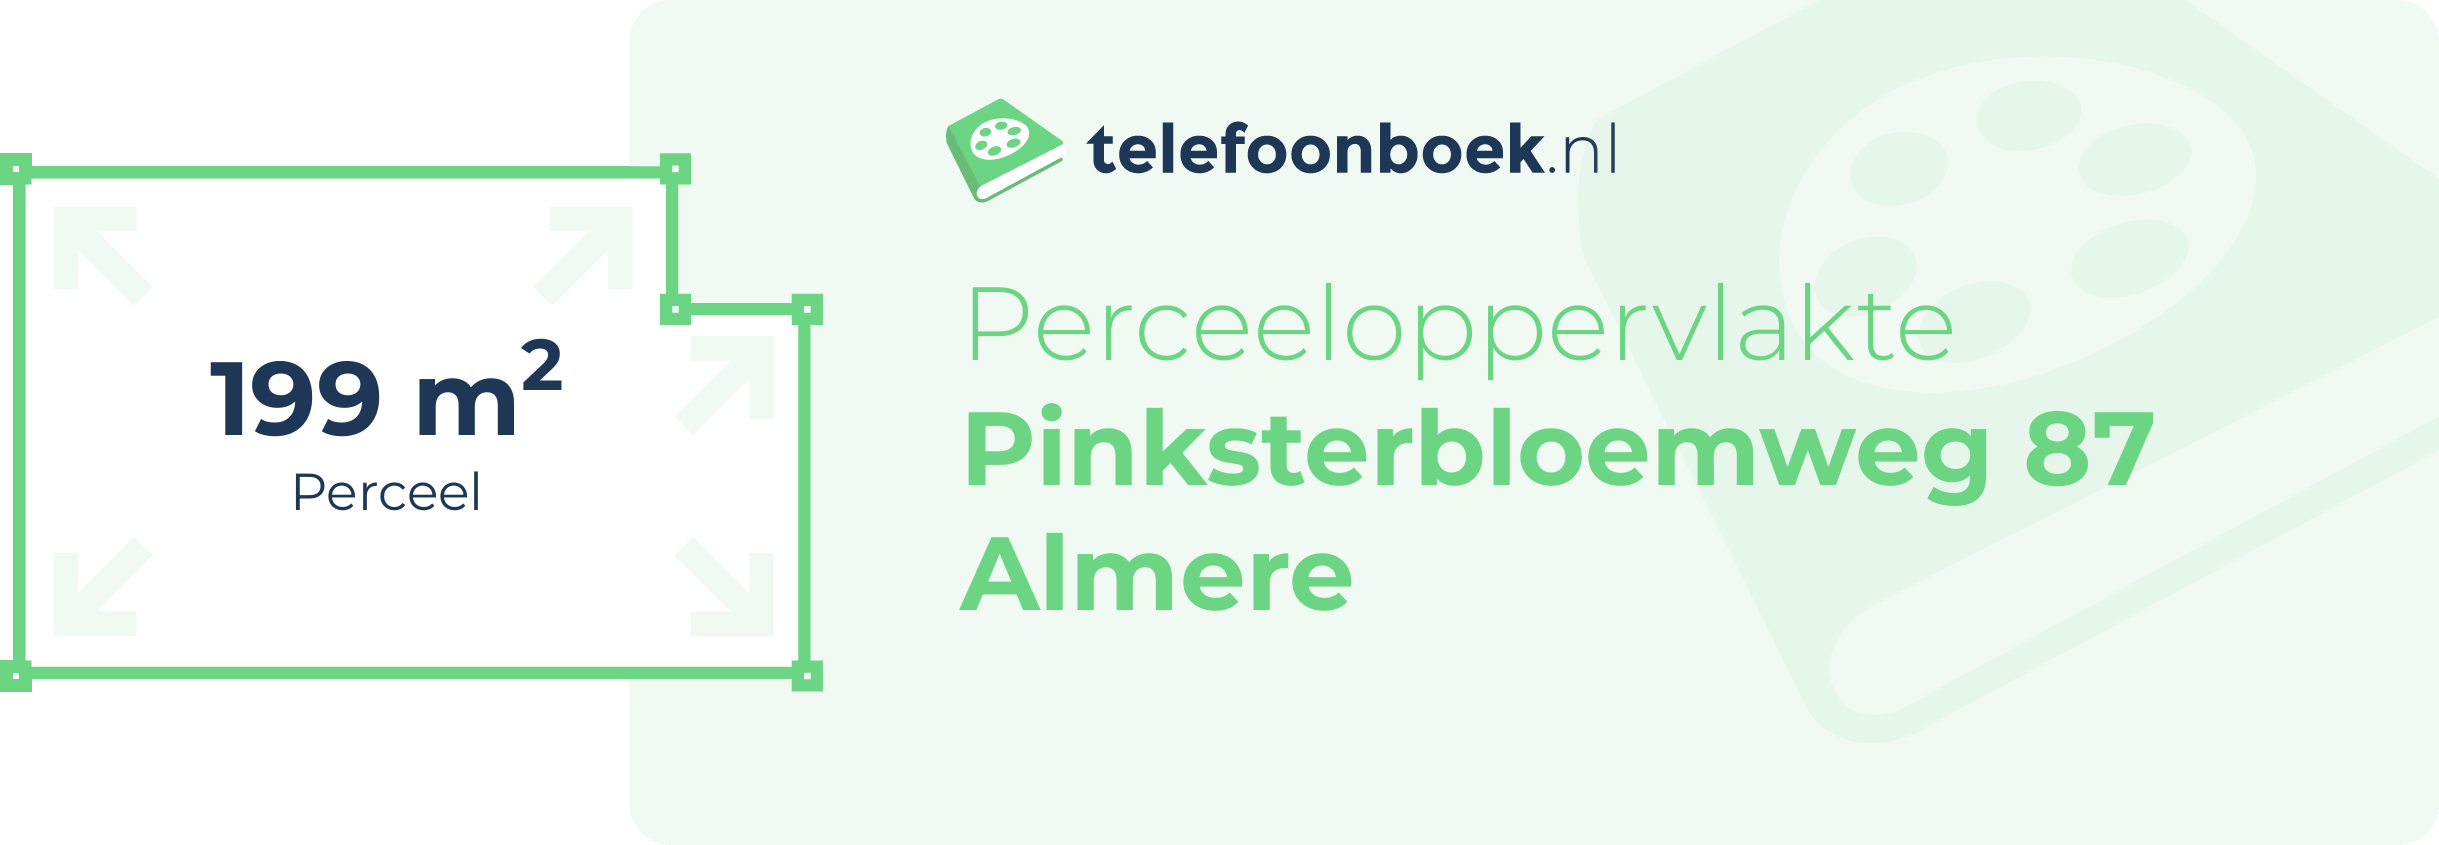 Perceeloppervlakte Pinksterbloemweg 87 Almere